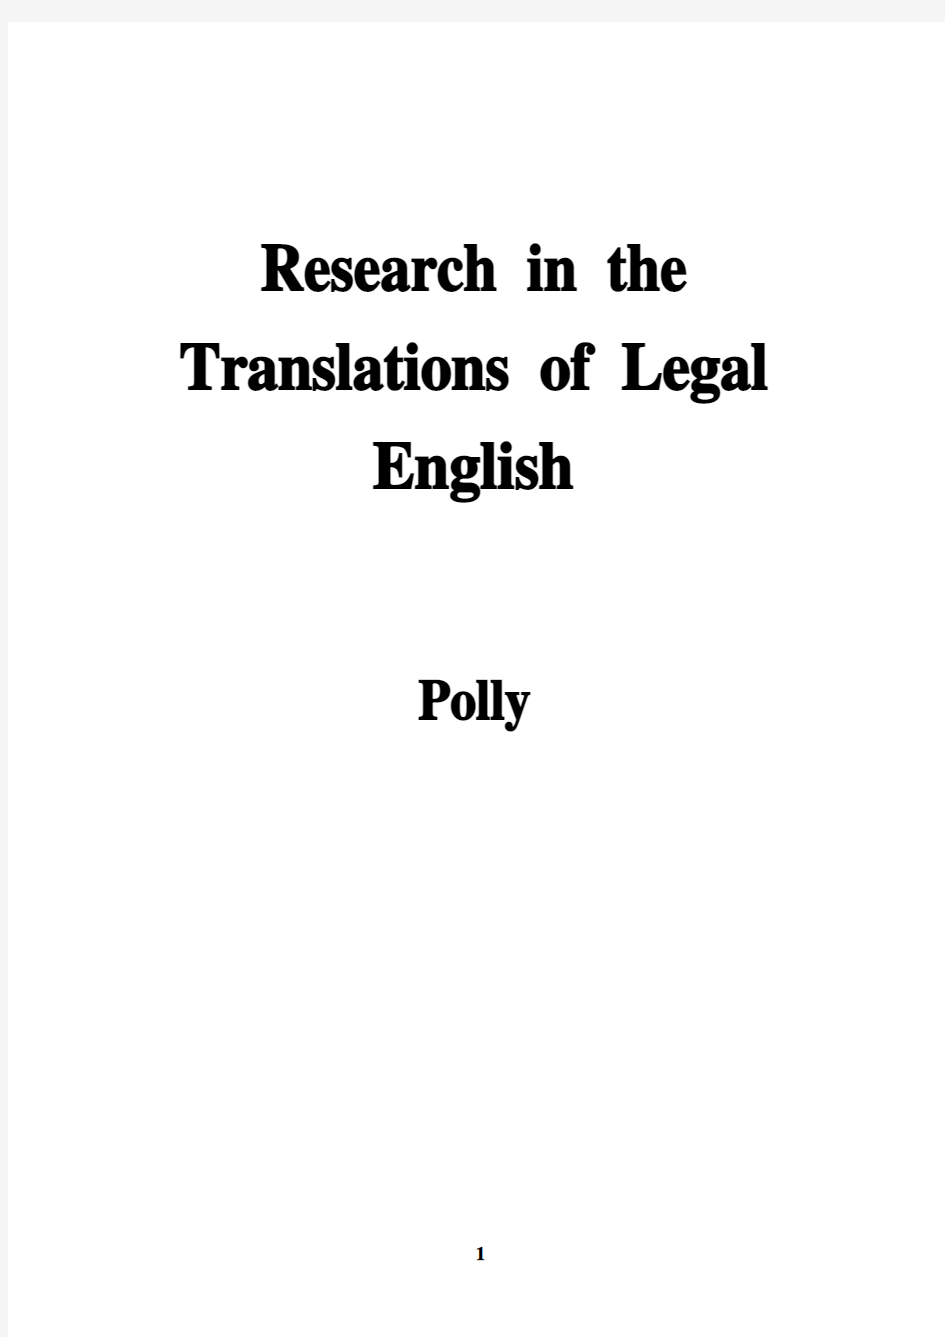 Research in translation of legal English(法律英语的翻译浅析)